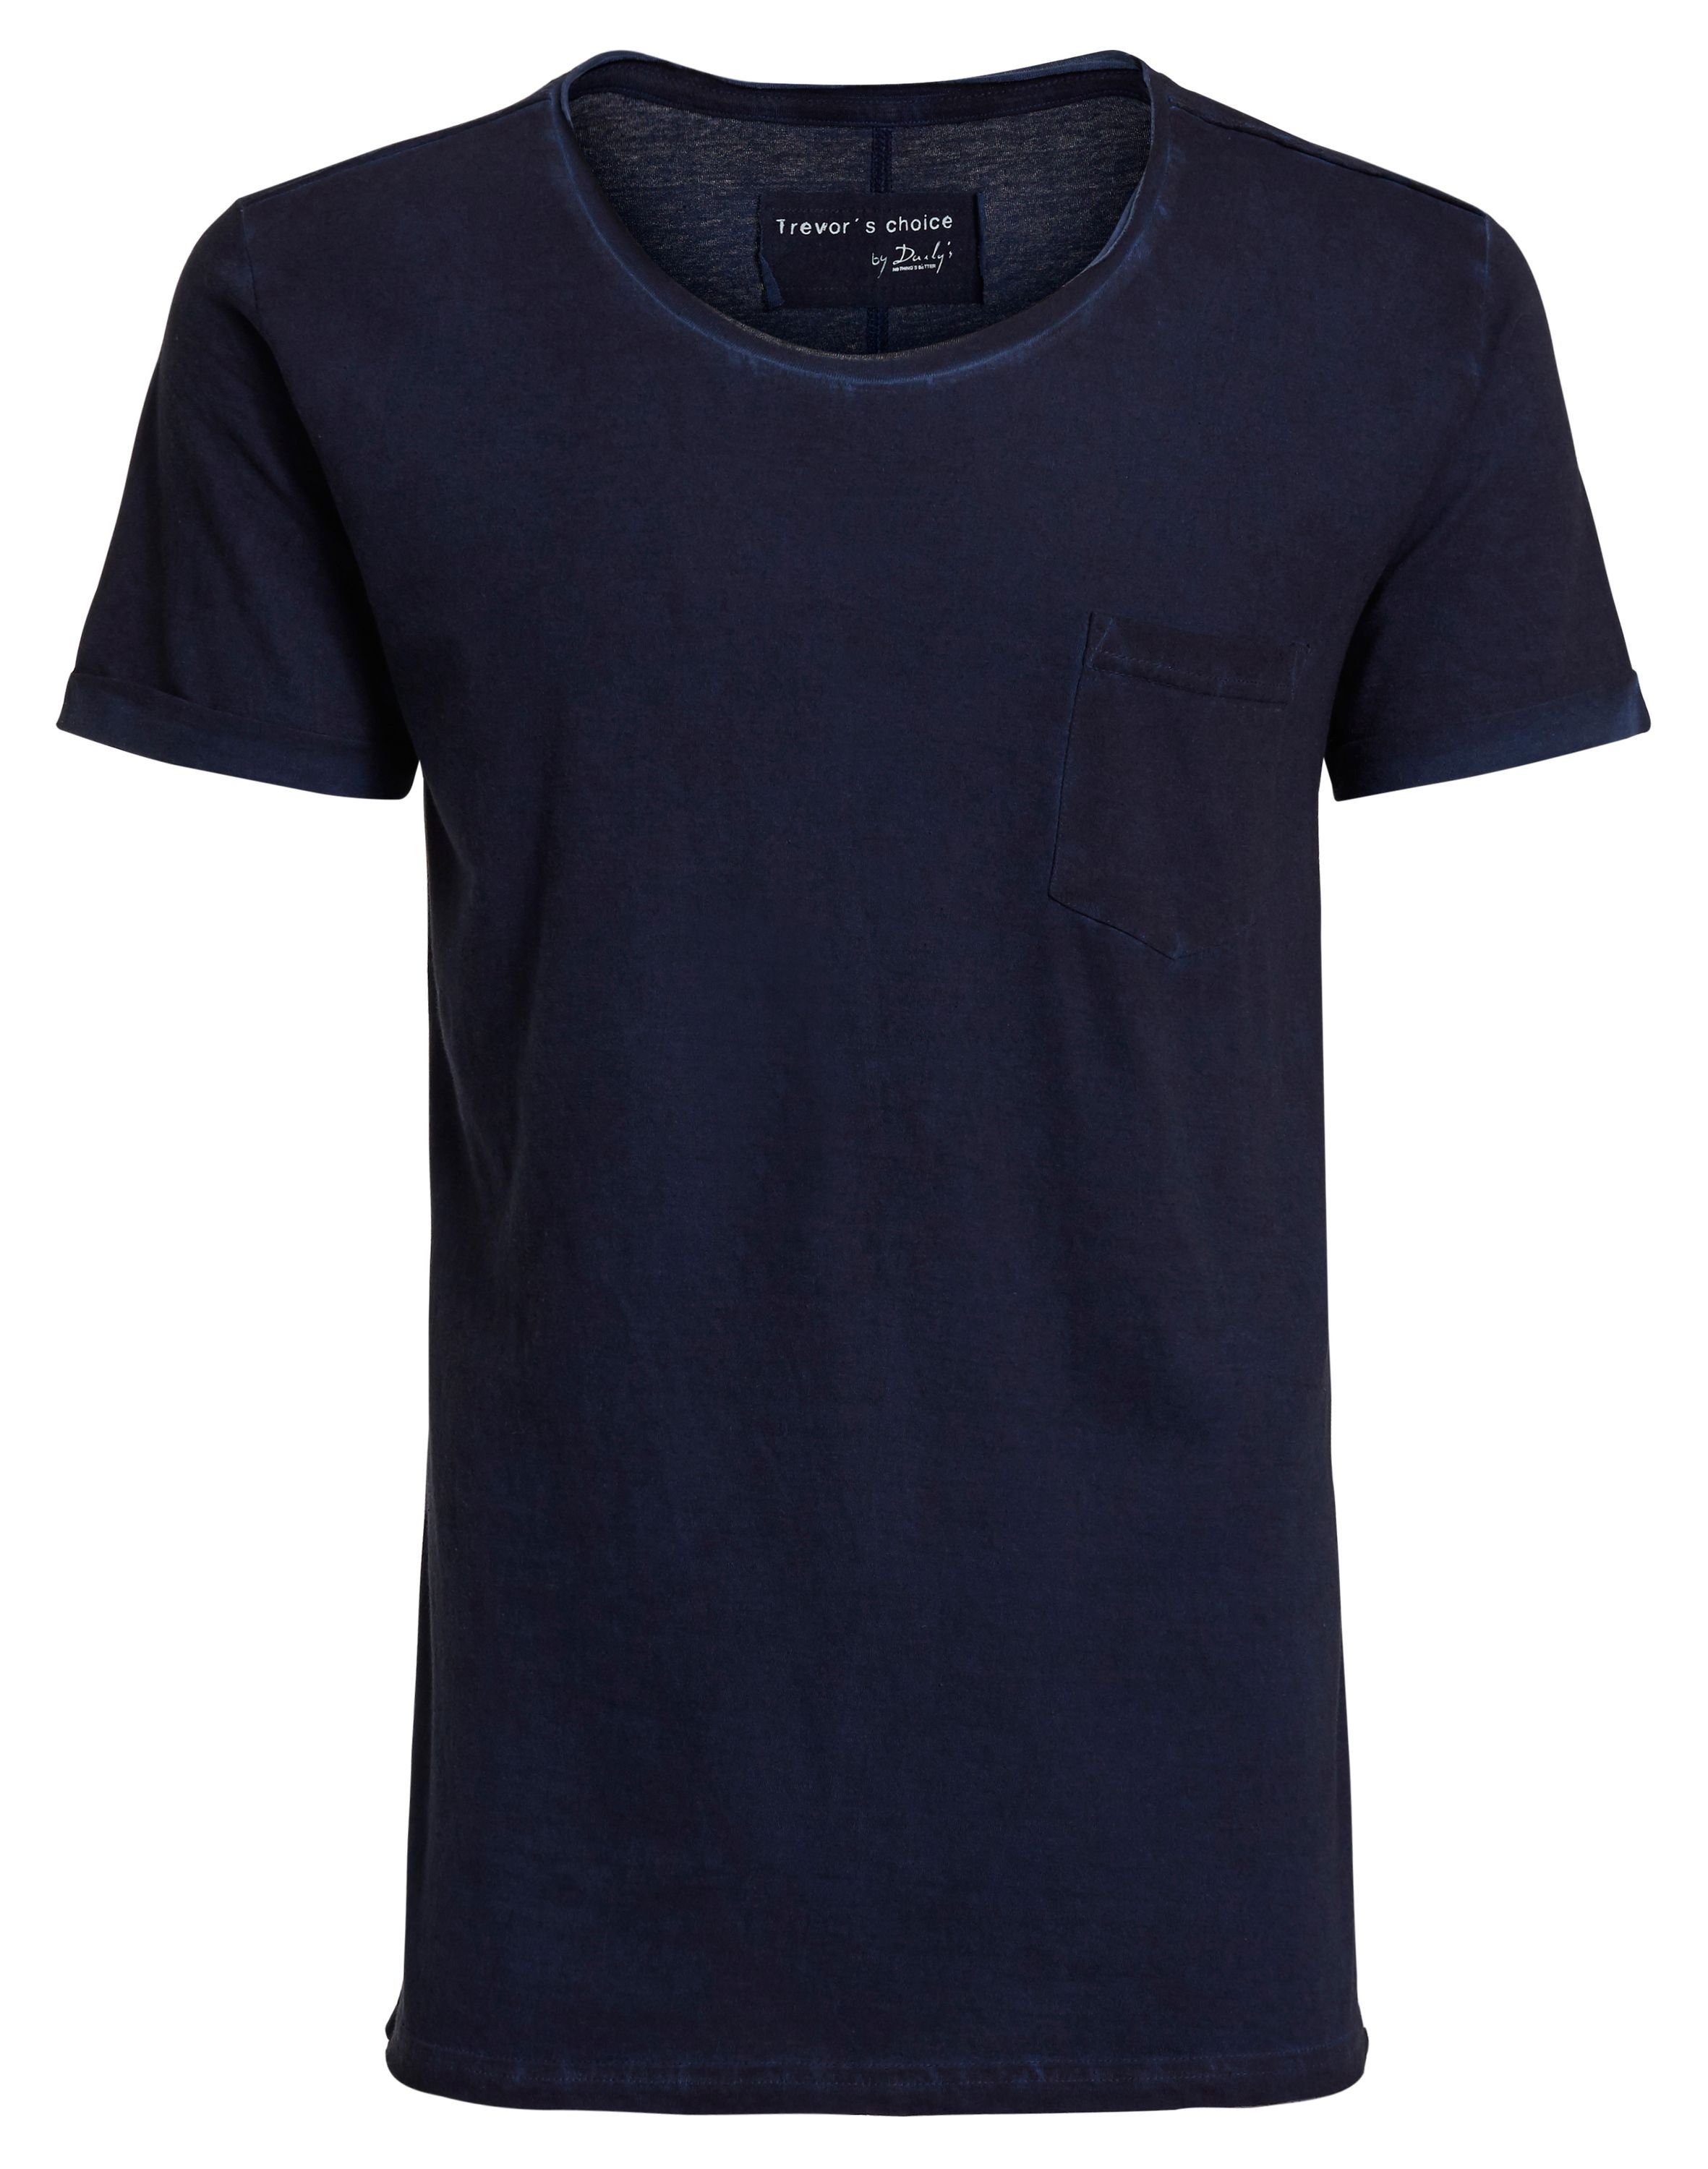 Navyblau DAILY´S basic Herren T-Shirt HANNO: T-Shirt